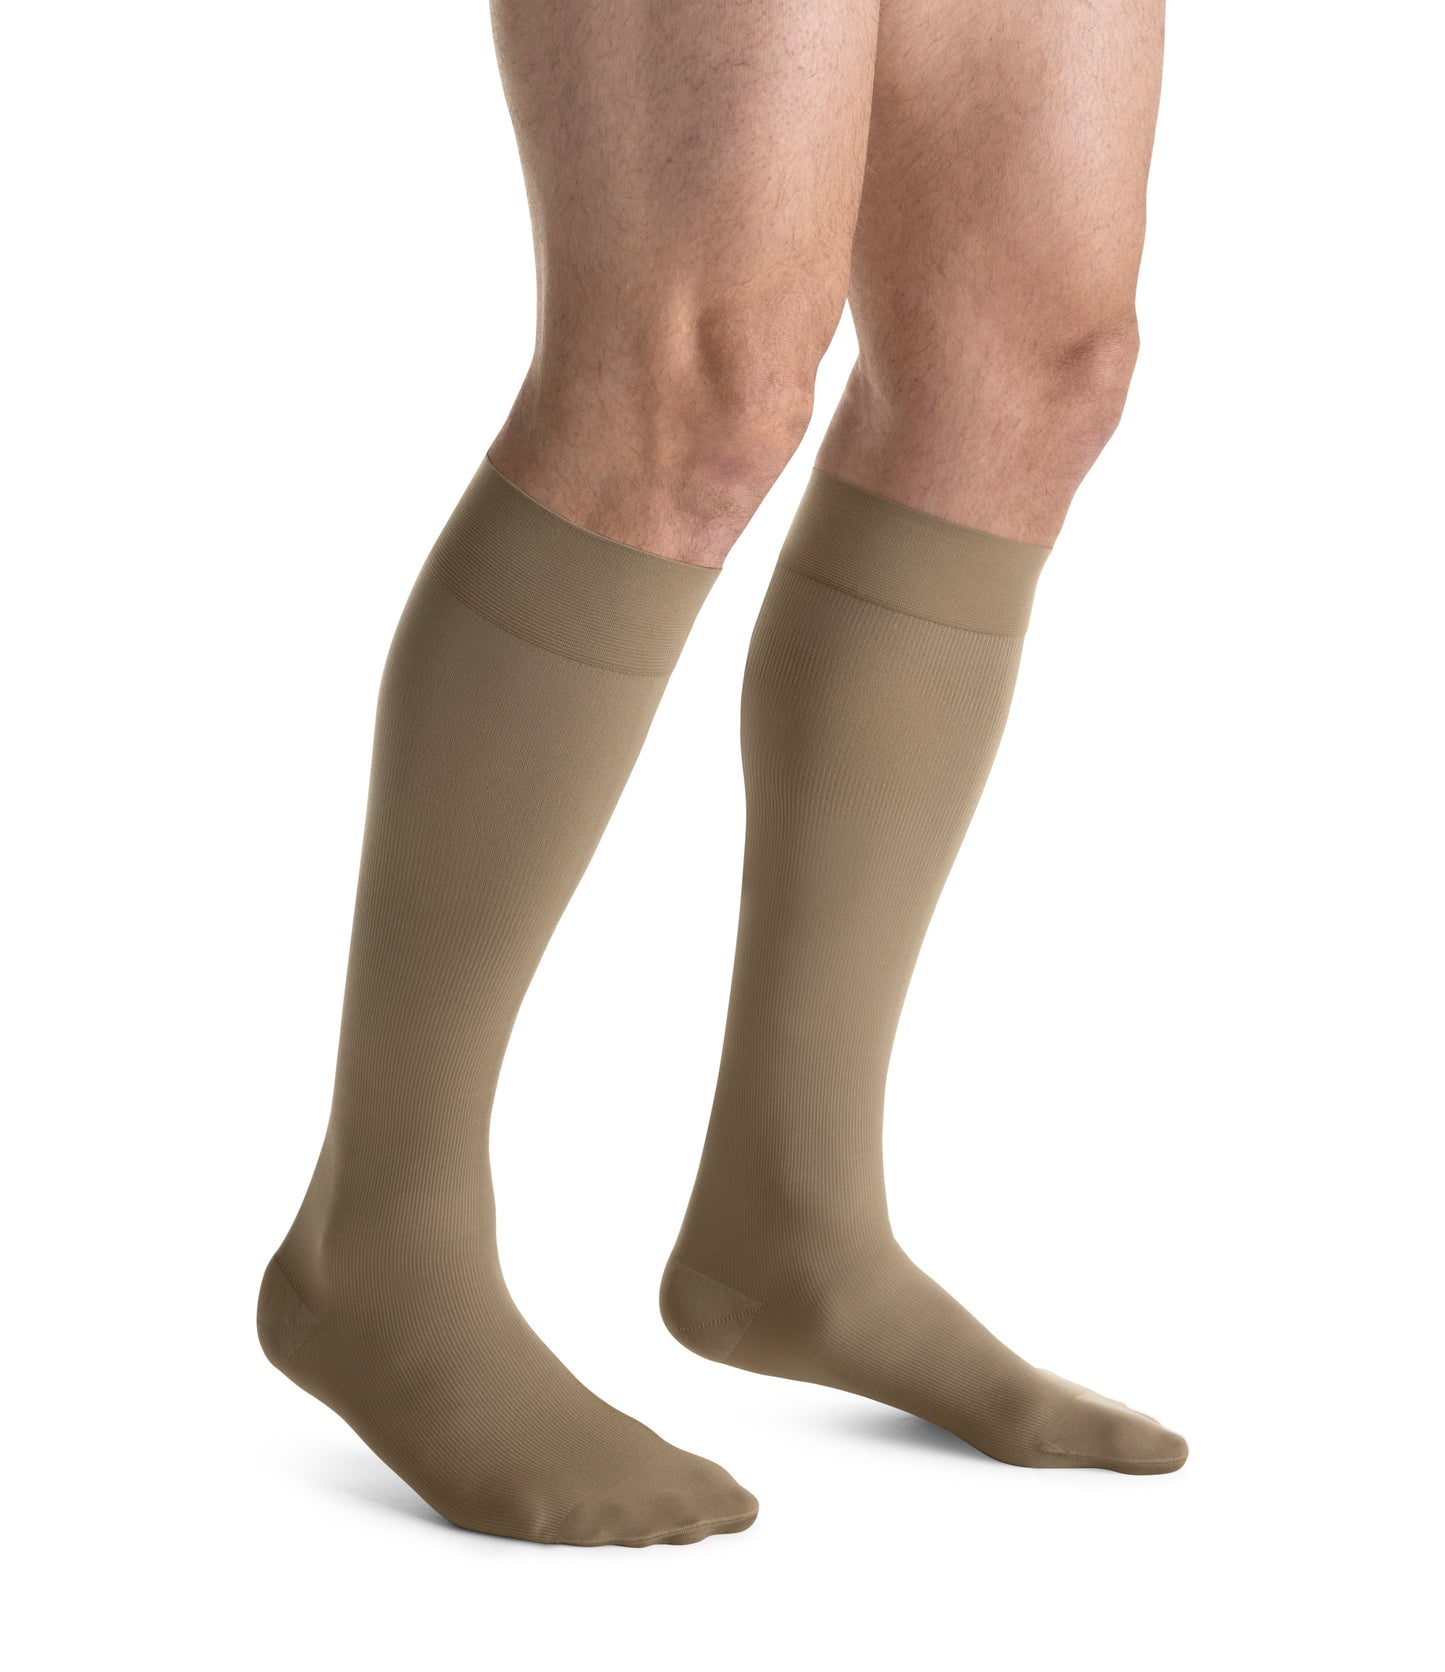 JOBST forMen Compression Socks 8-15 mmHg Knee High Closed Toe